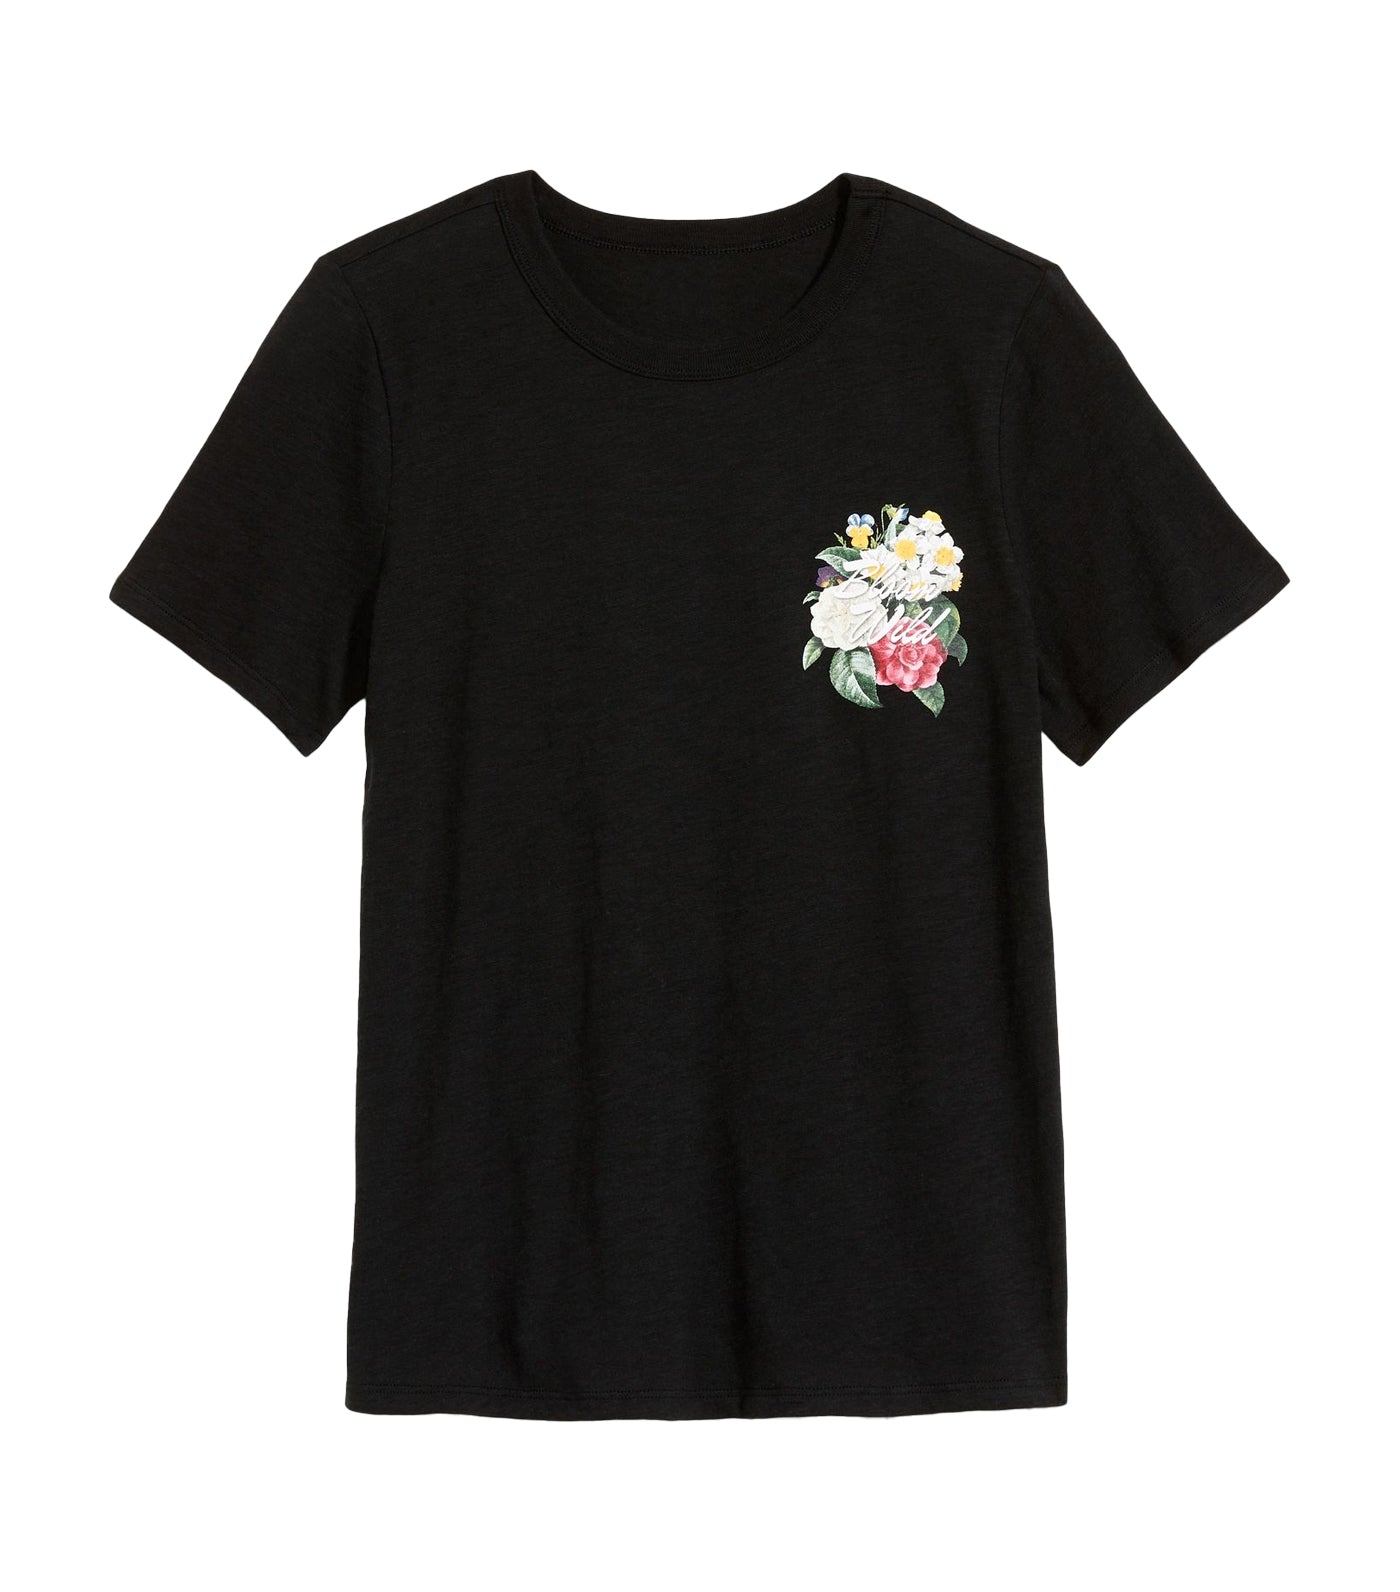 EveryWear Slub-Knit Graphic T-Shirt for Women Black Jack